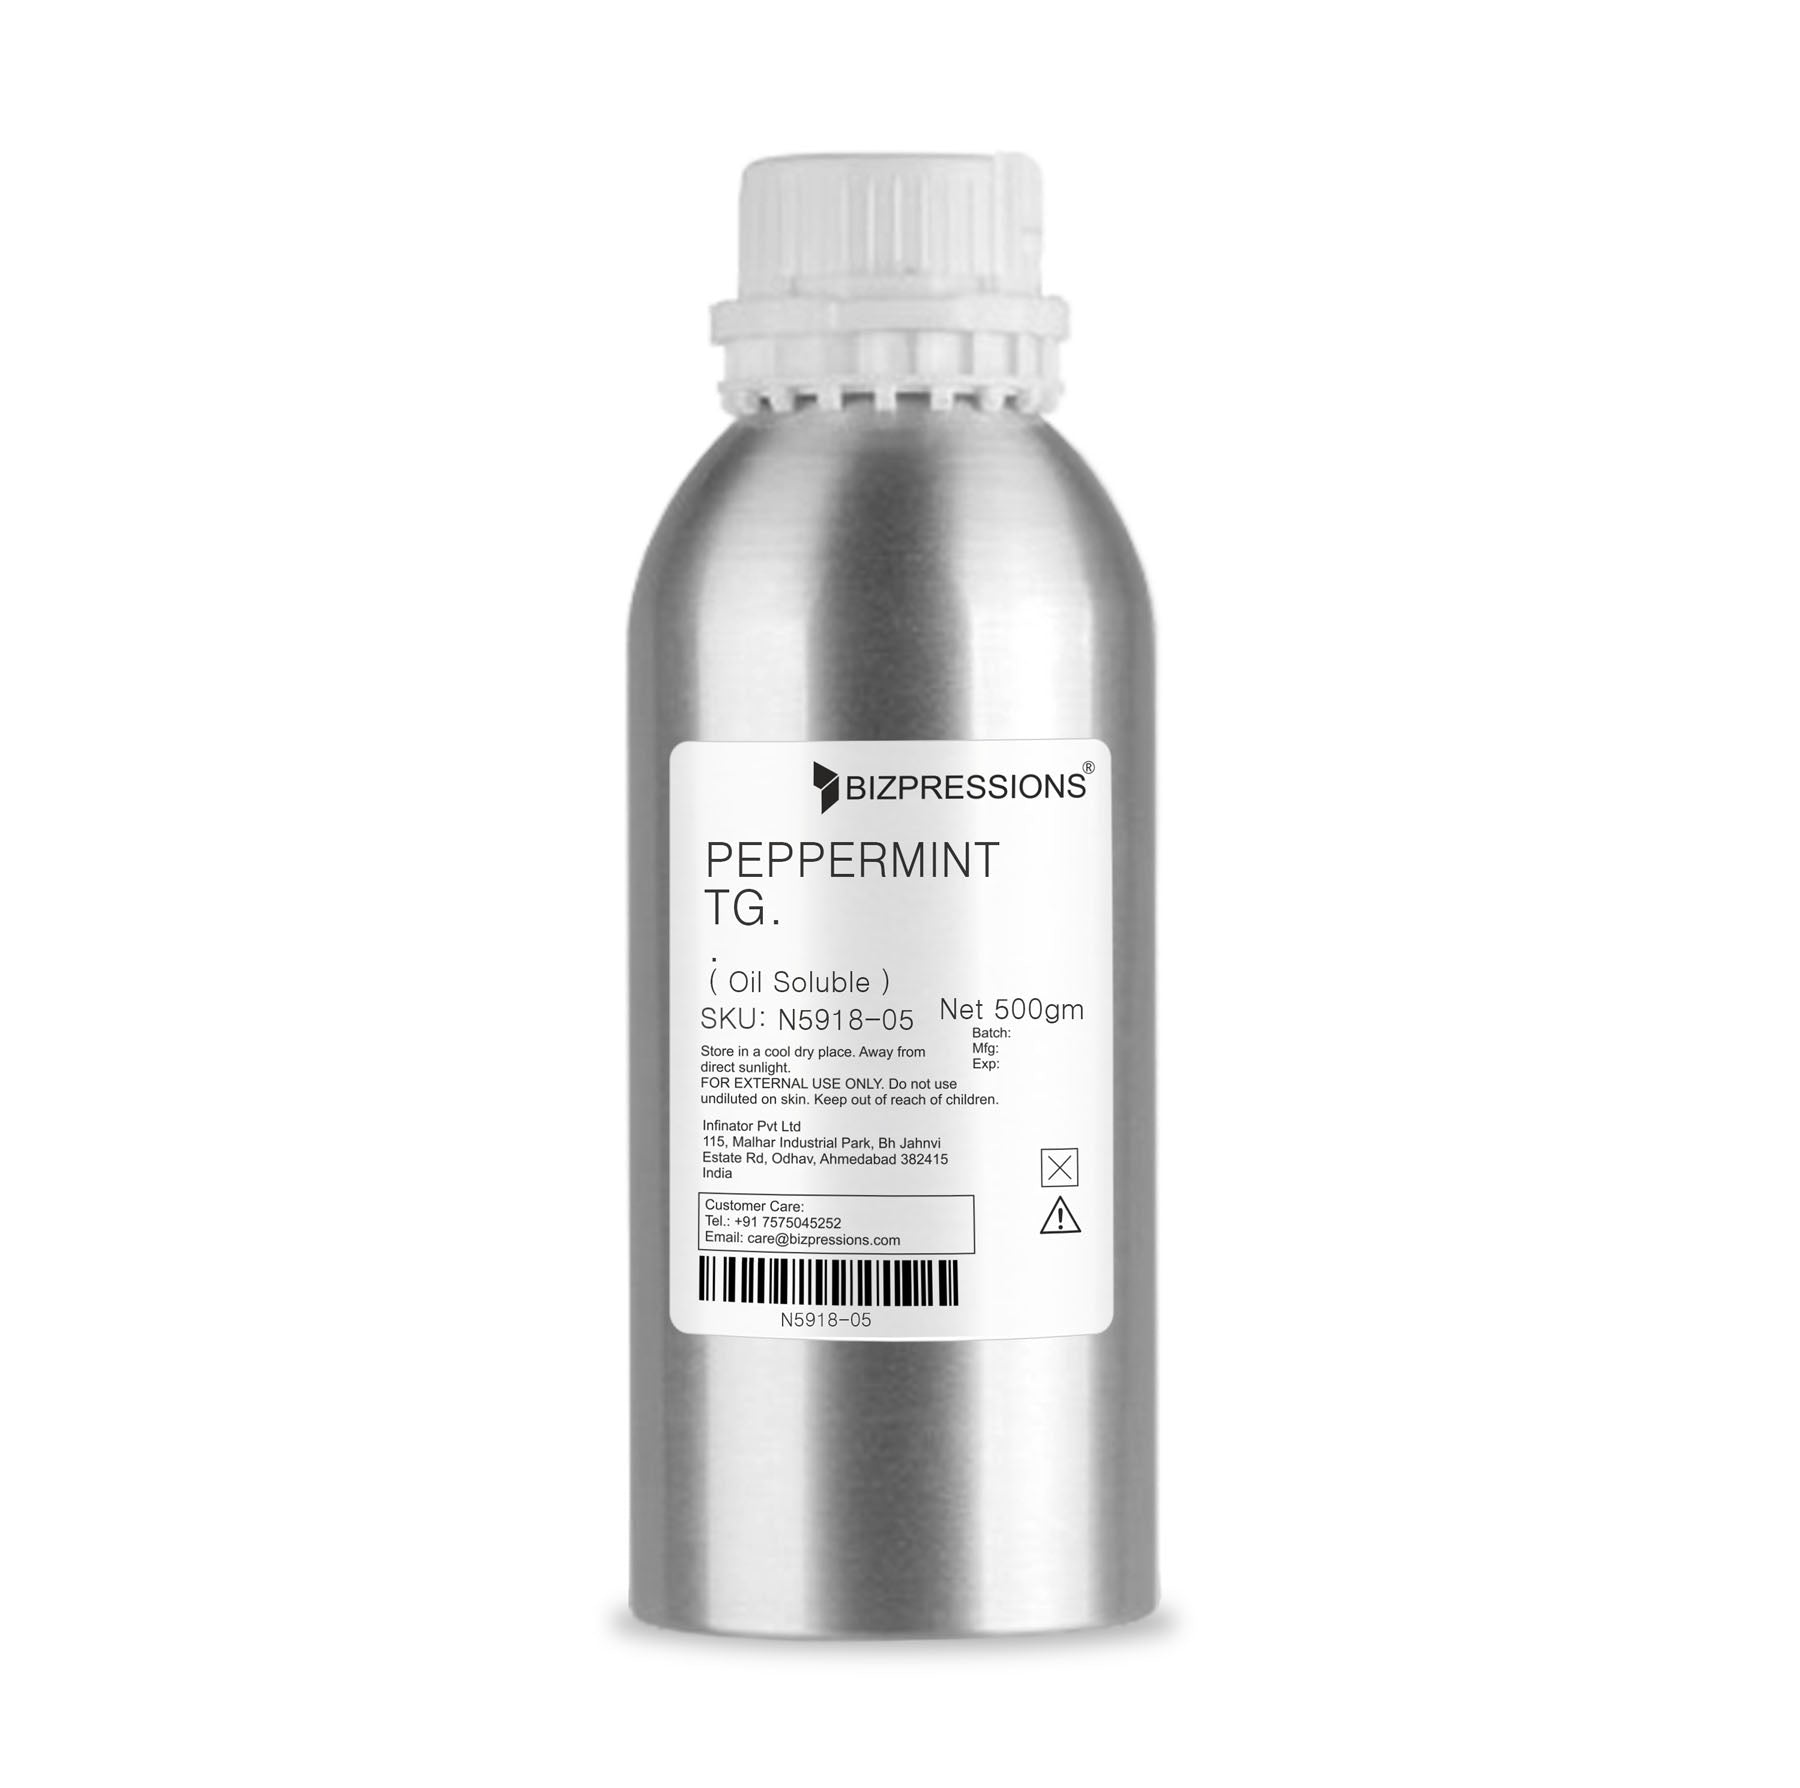 PEPPERMINT TG. - Fragrance ( Oil Soluble ) - 500 gm